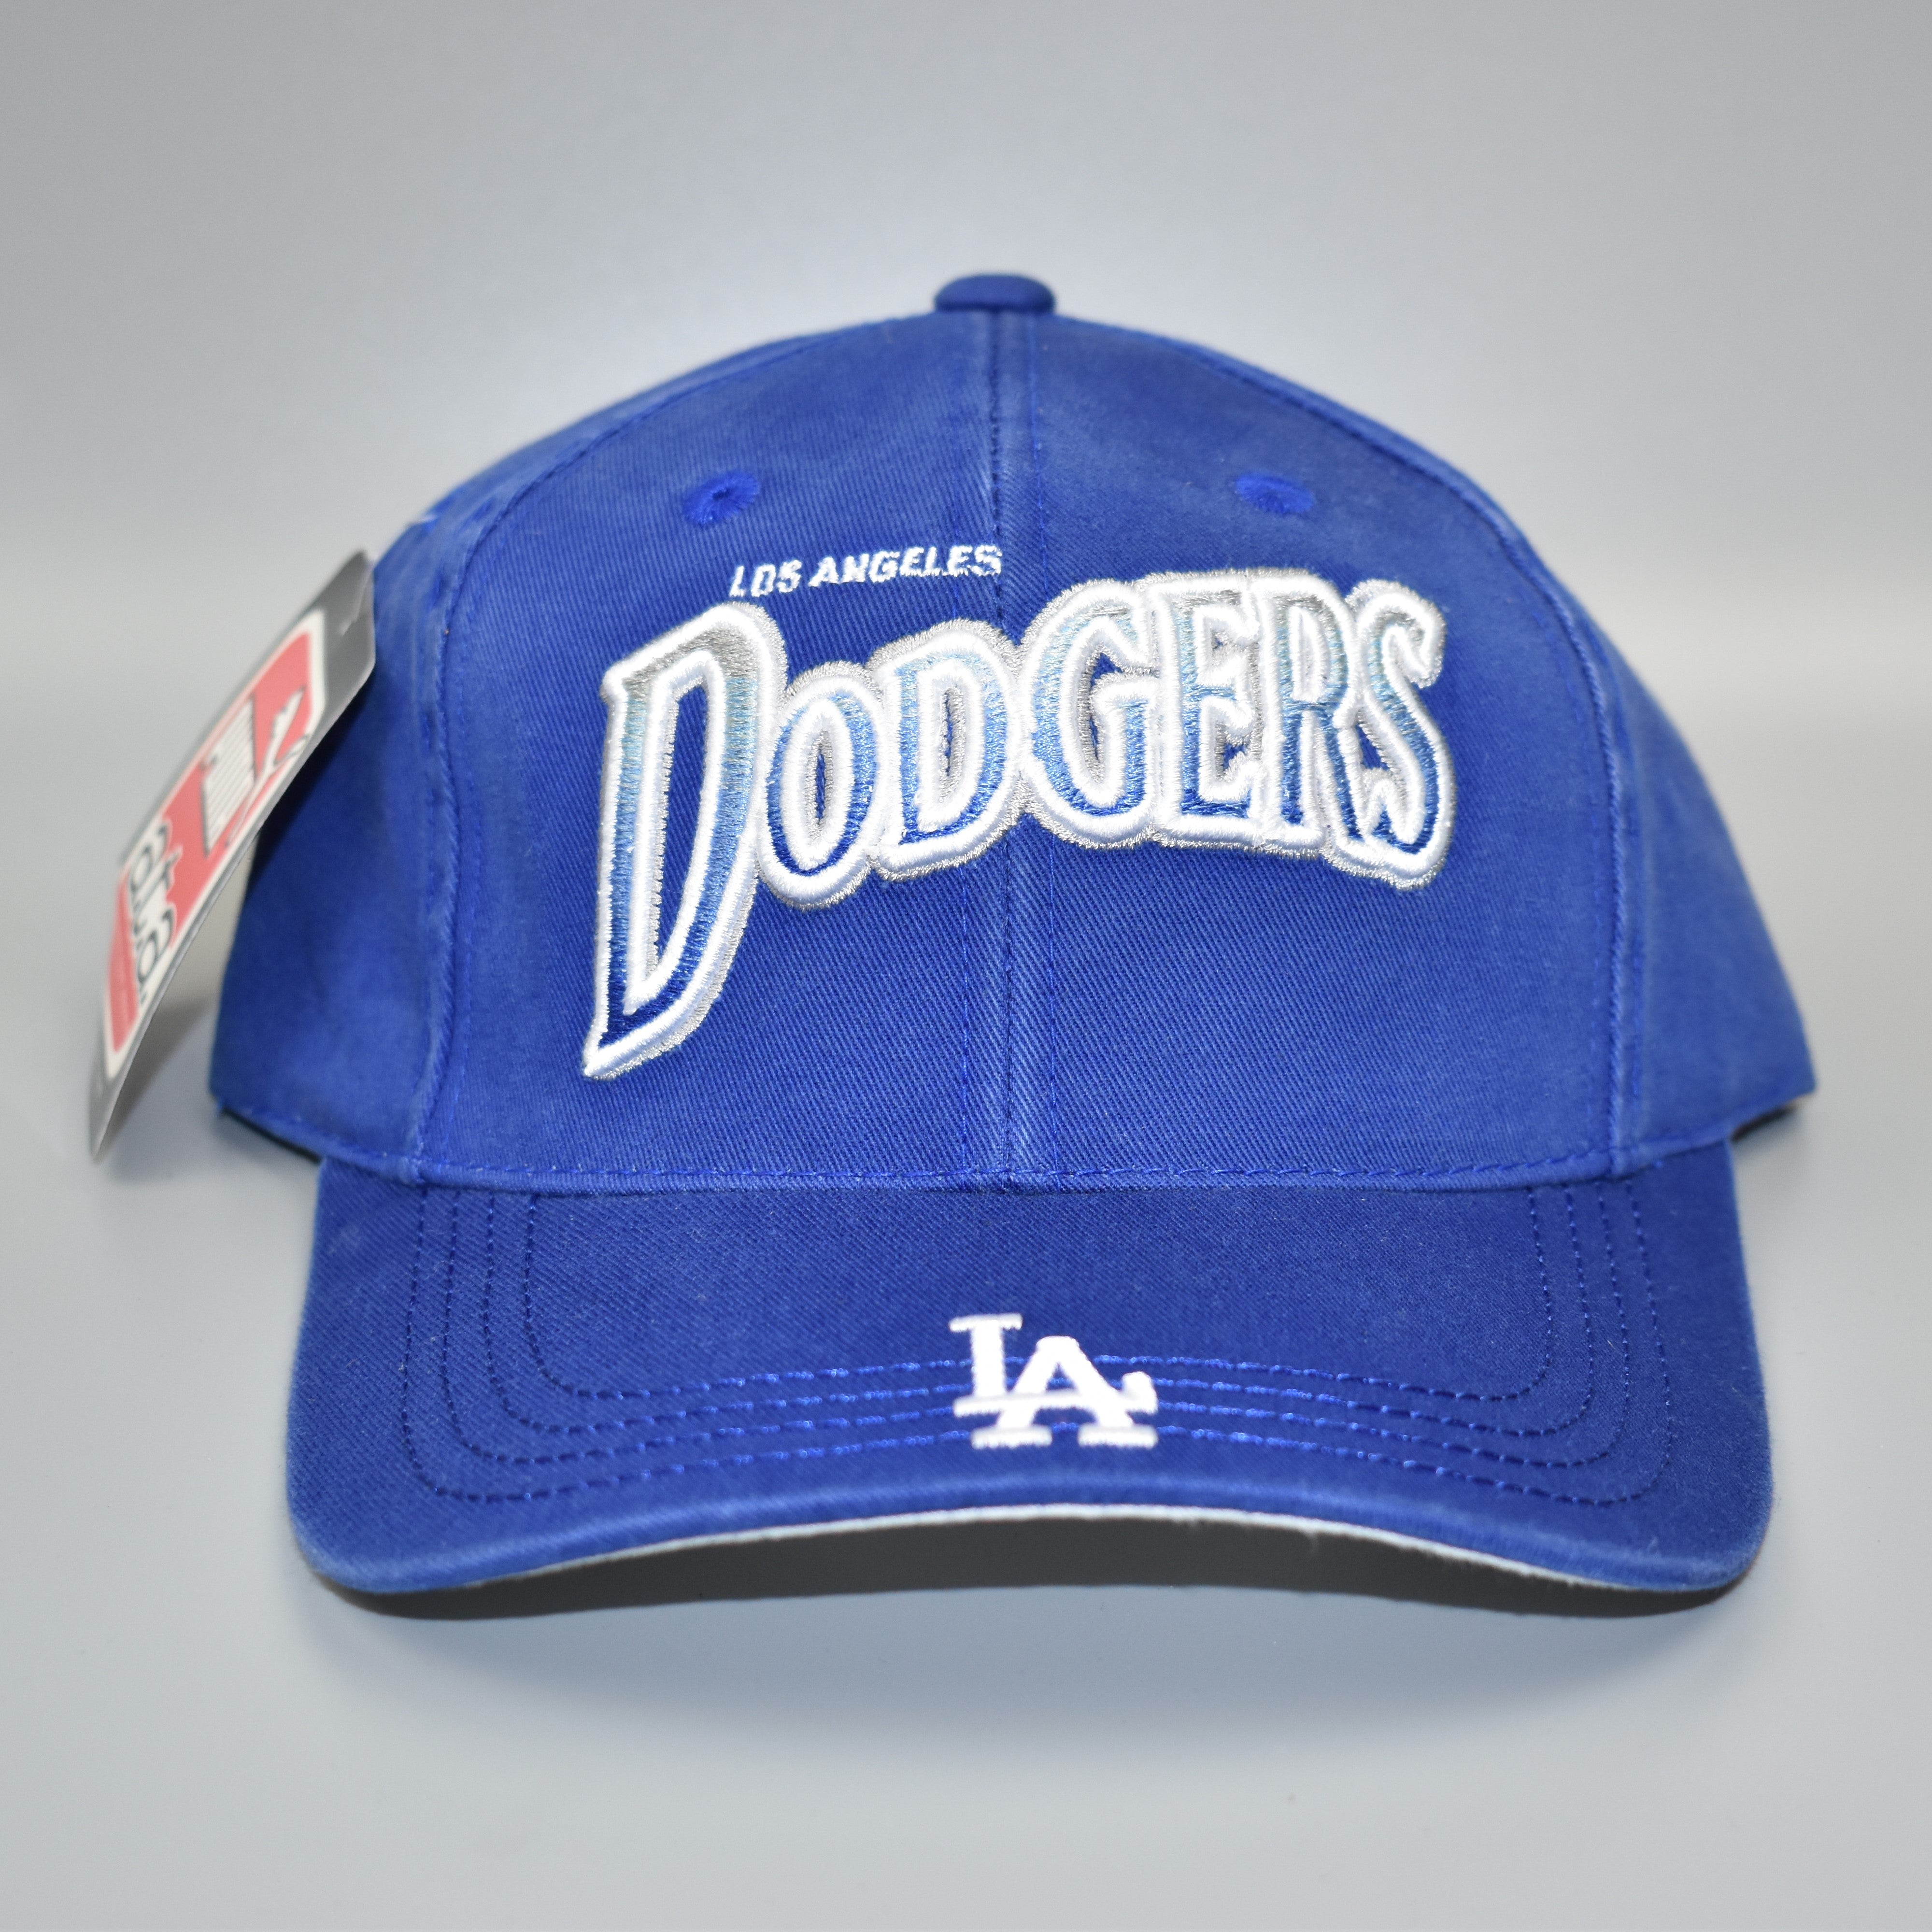 Vintage Cap,LA Dodgers, Snapback, Adjustable, High quality, With